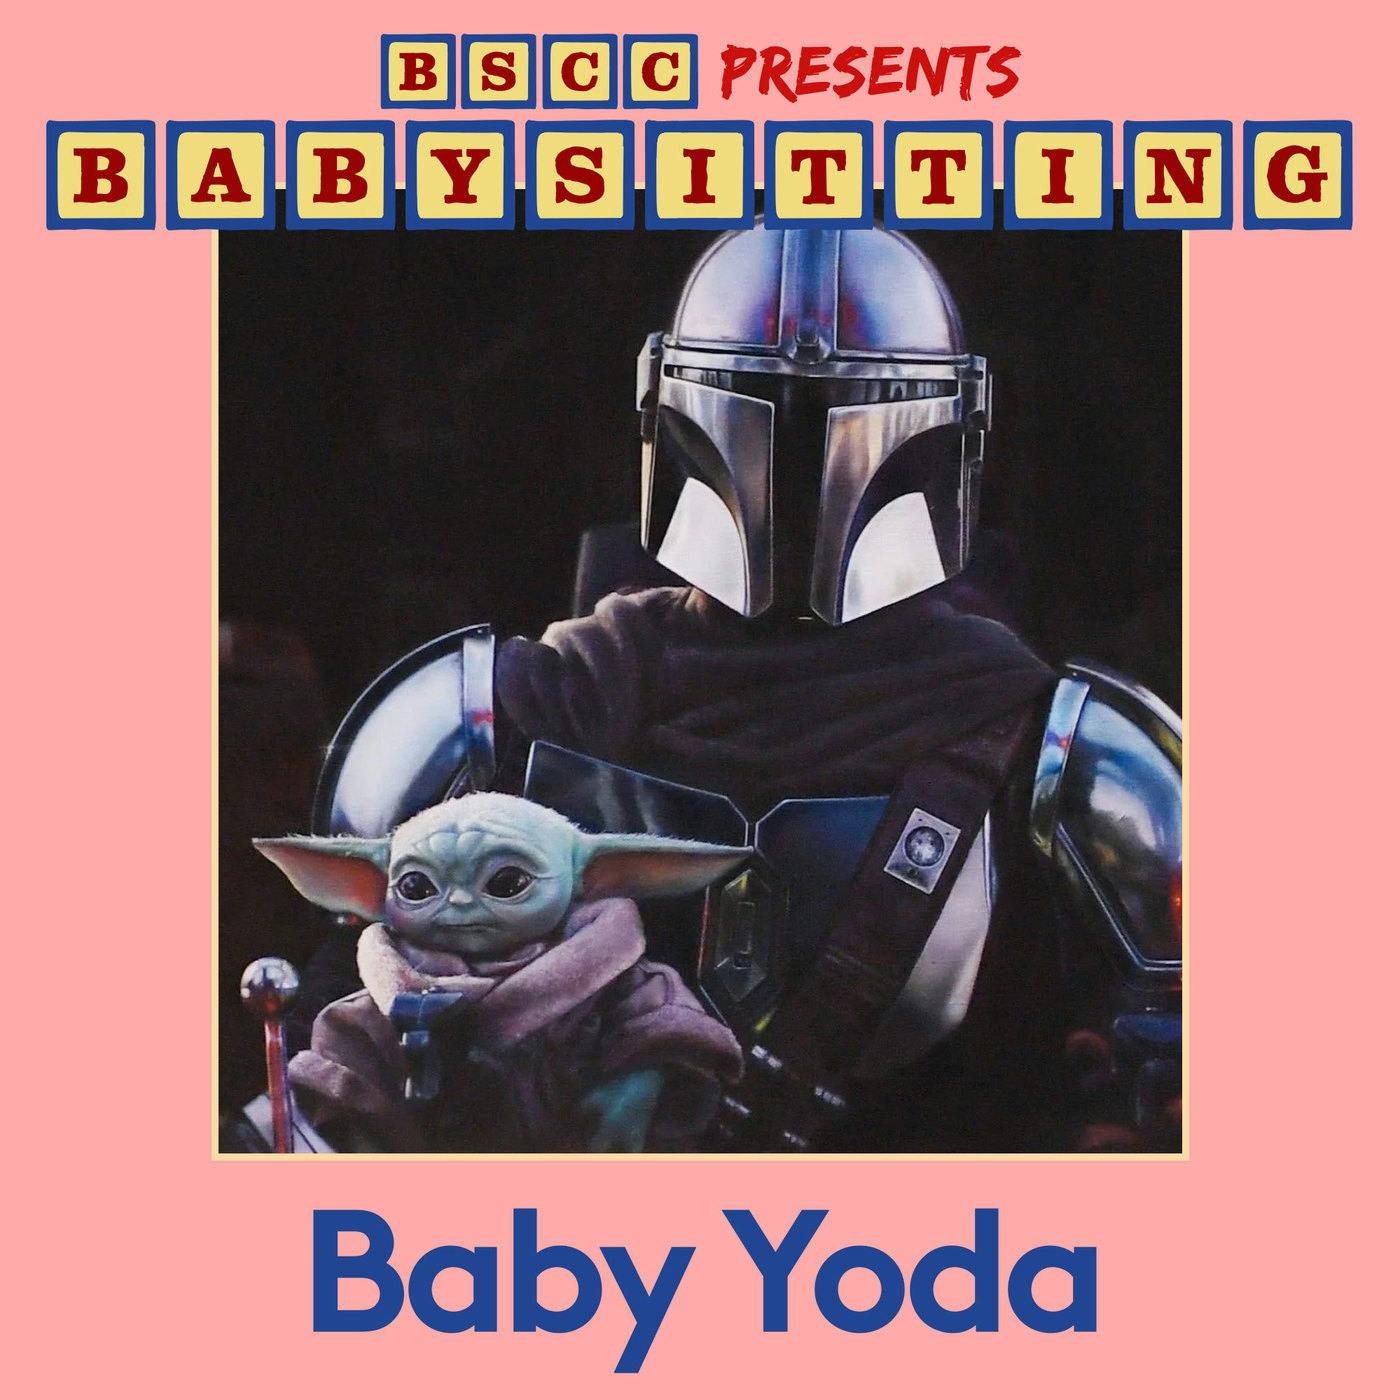 BSCC Presents: Babysitting Baby Yoda